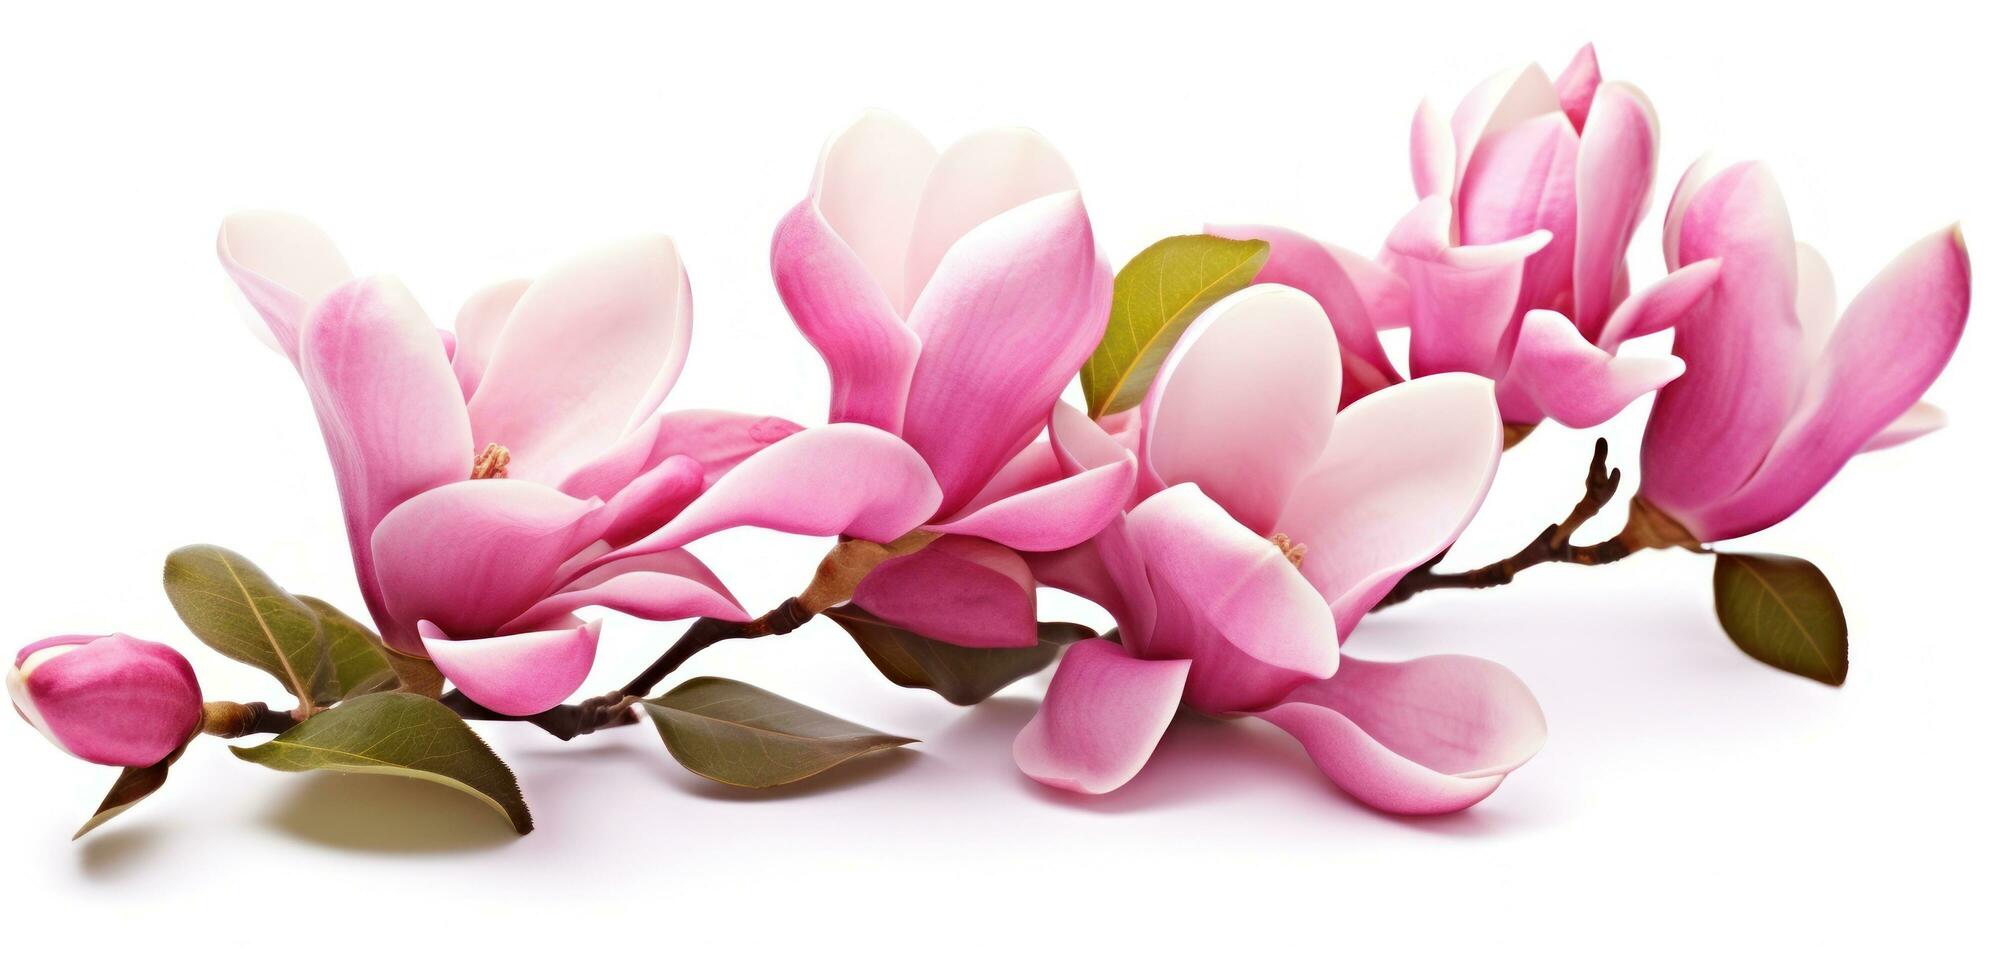 Pink magnolia flower isolated photo